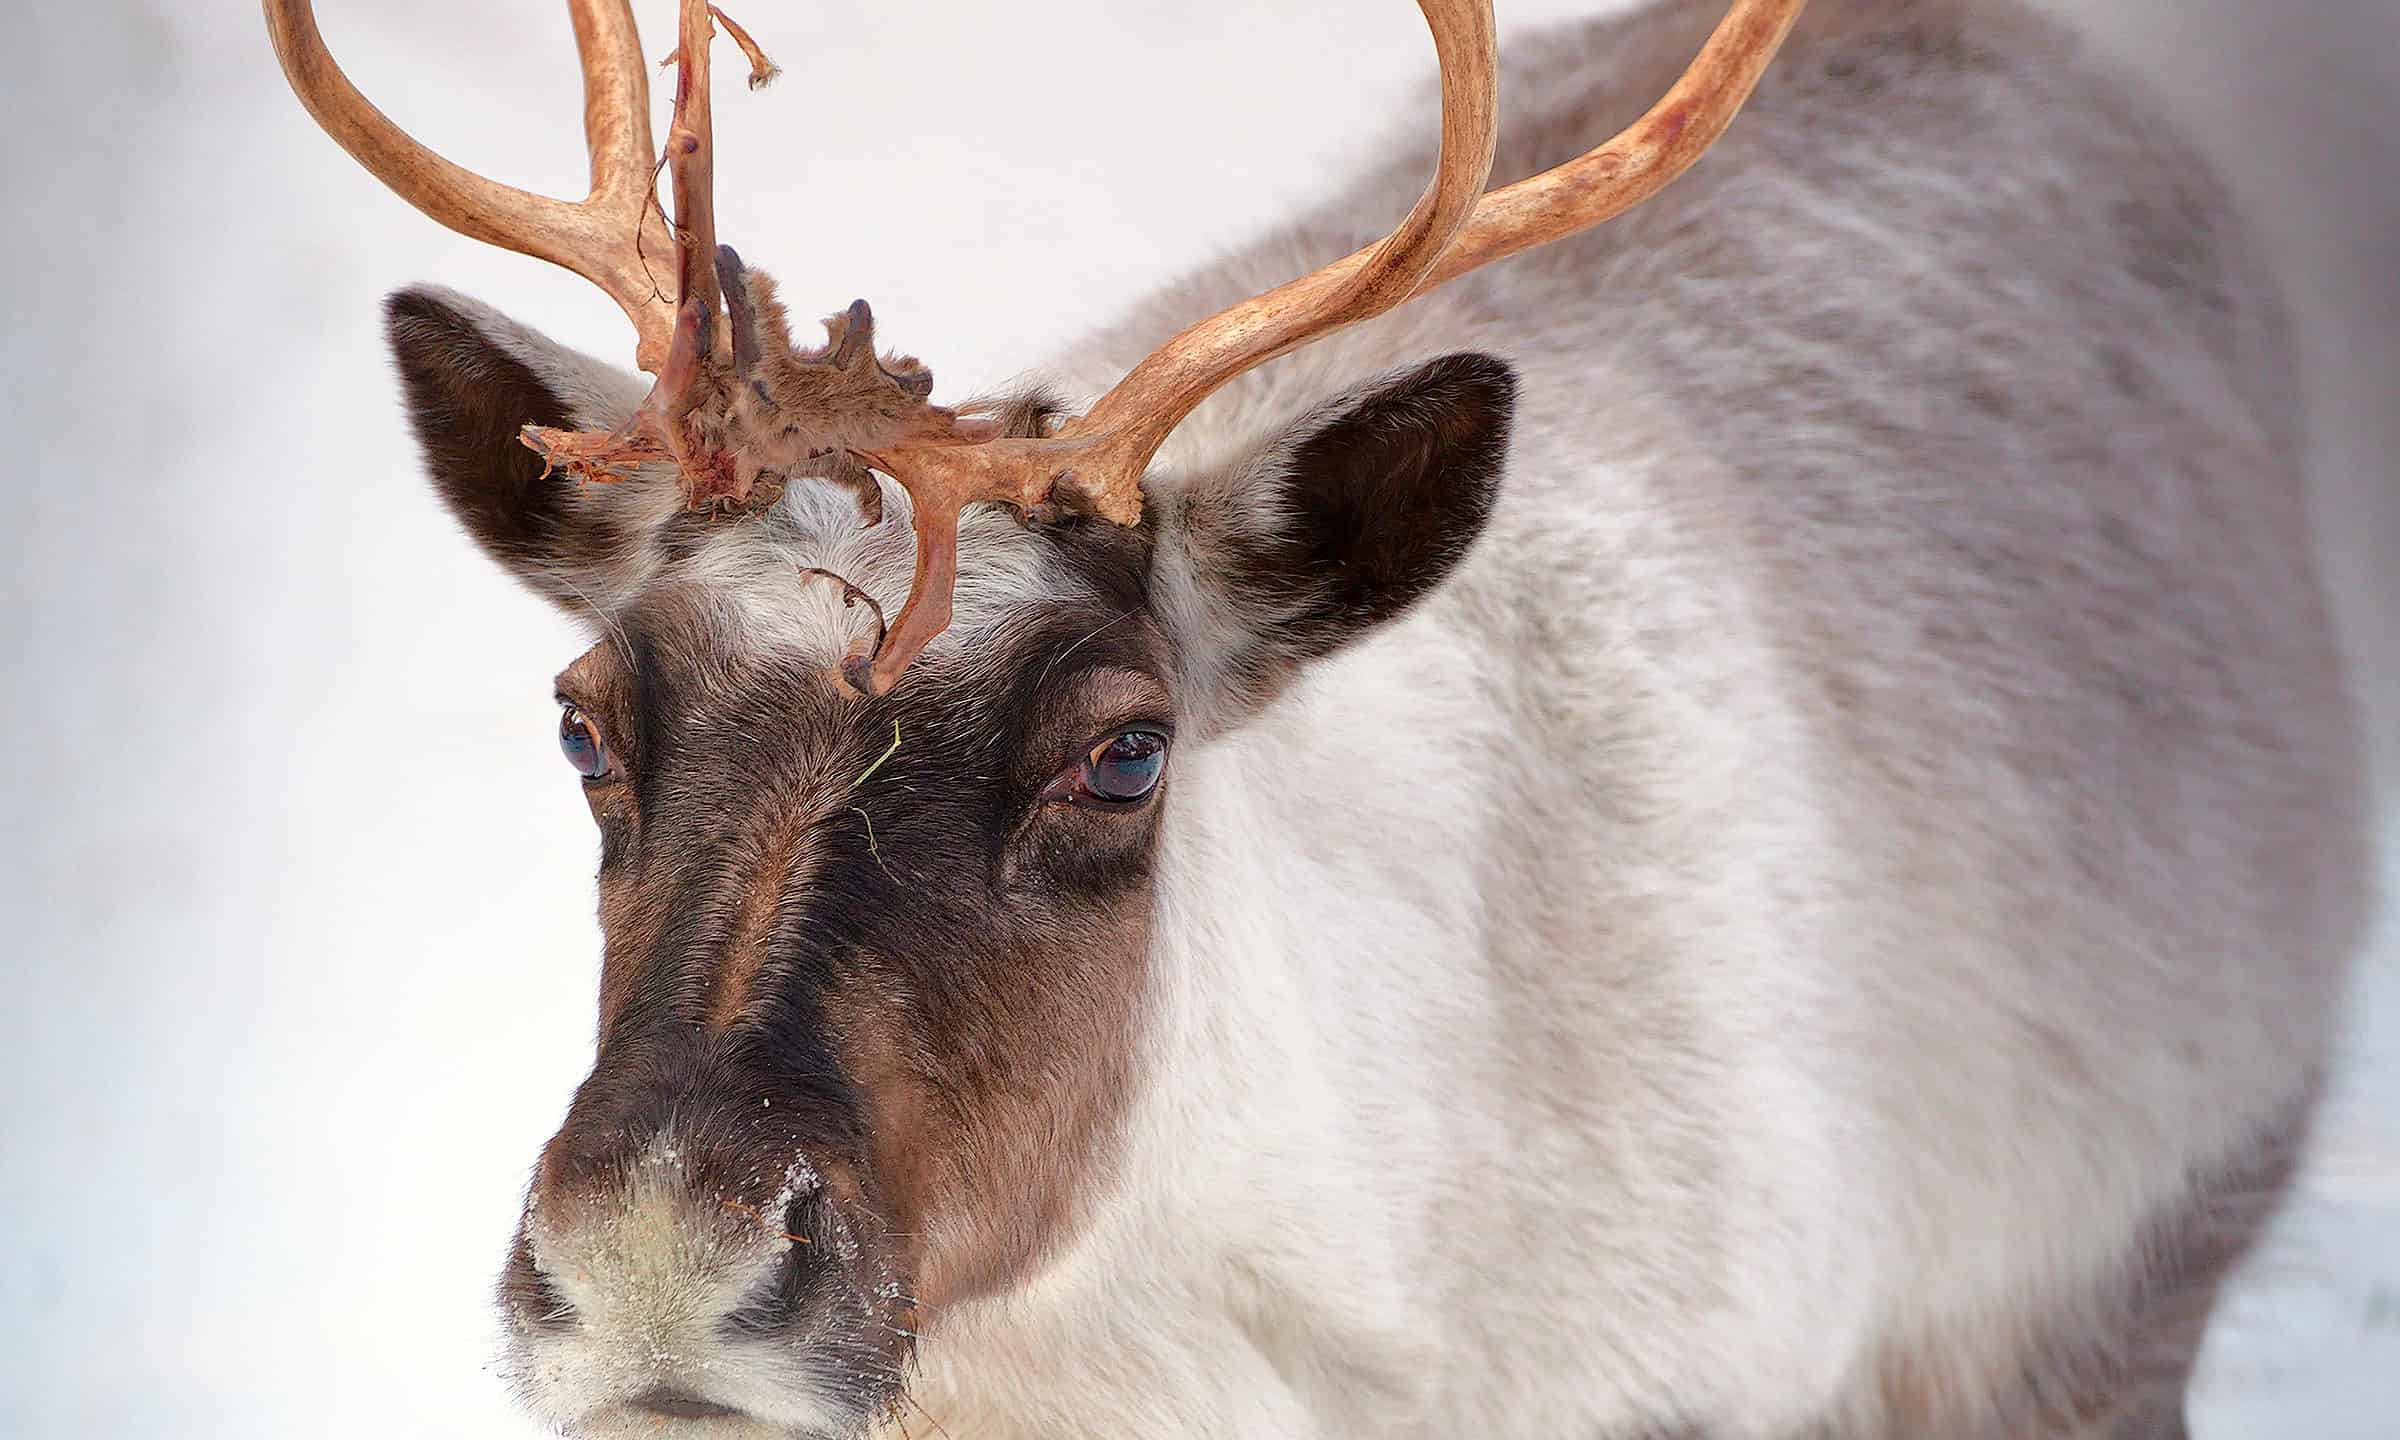 Close up of reindeer face and nose